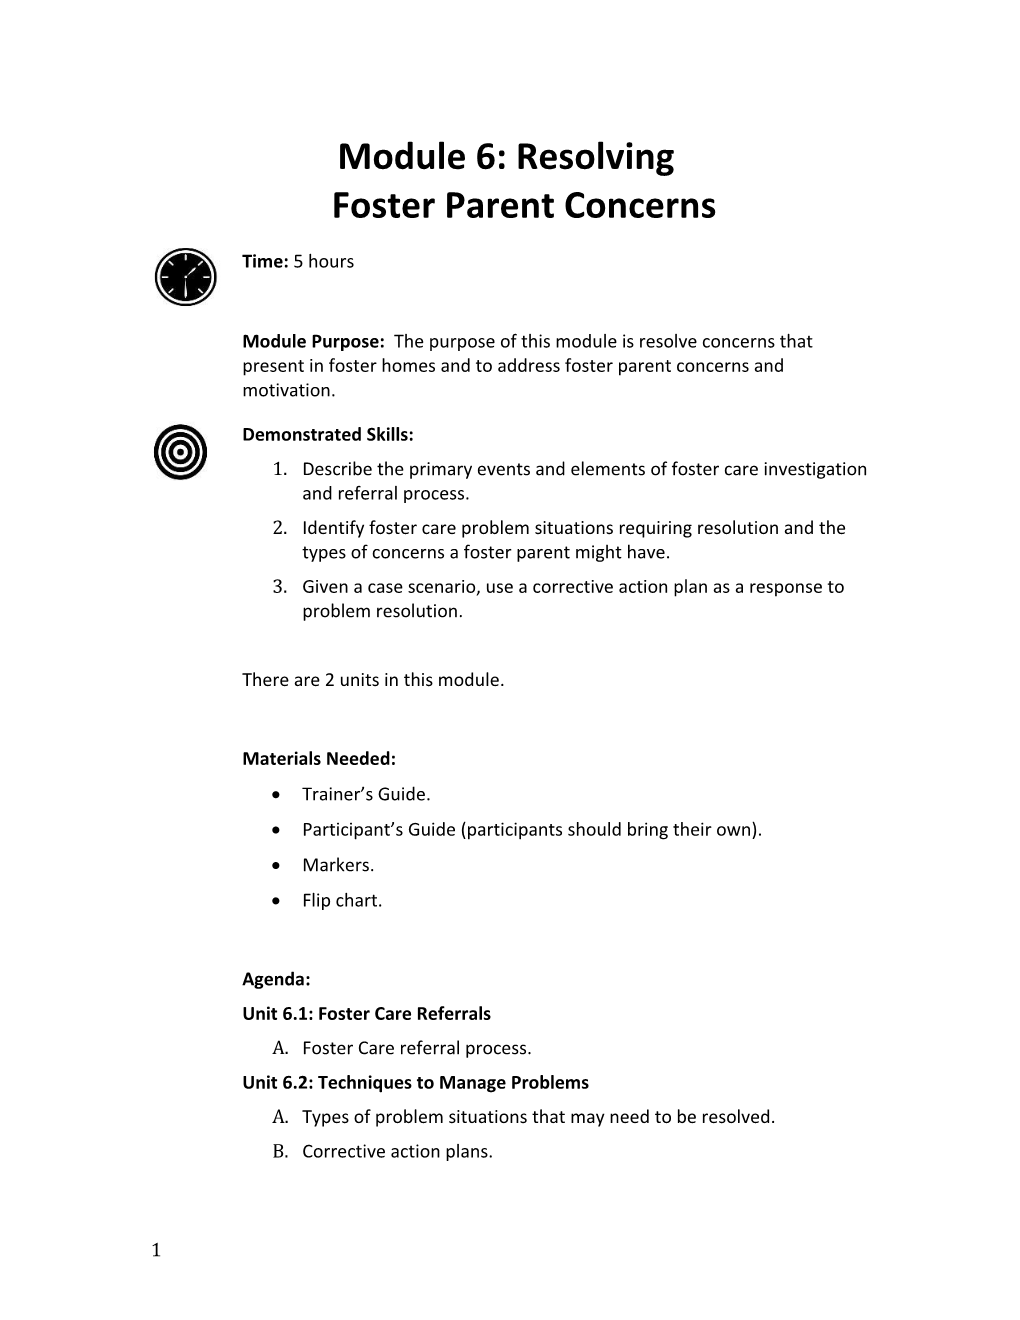 Module 6: Resolving Foster Parent Concerns